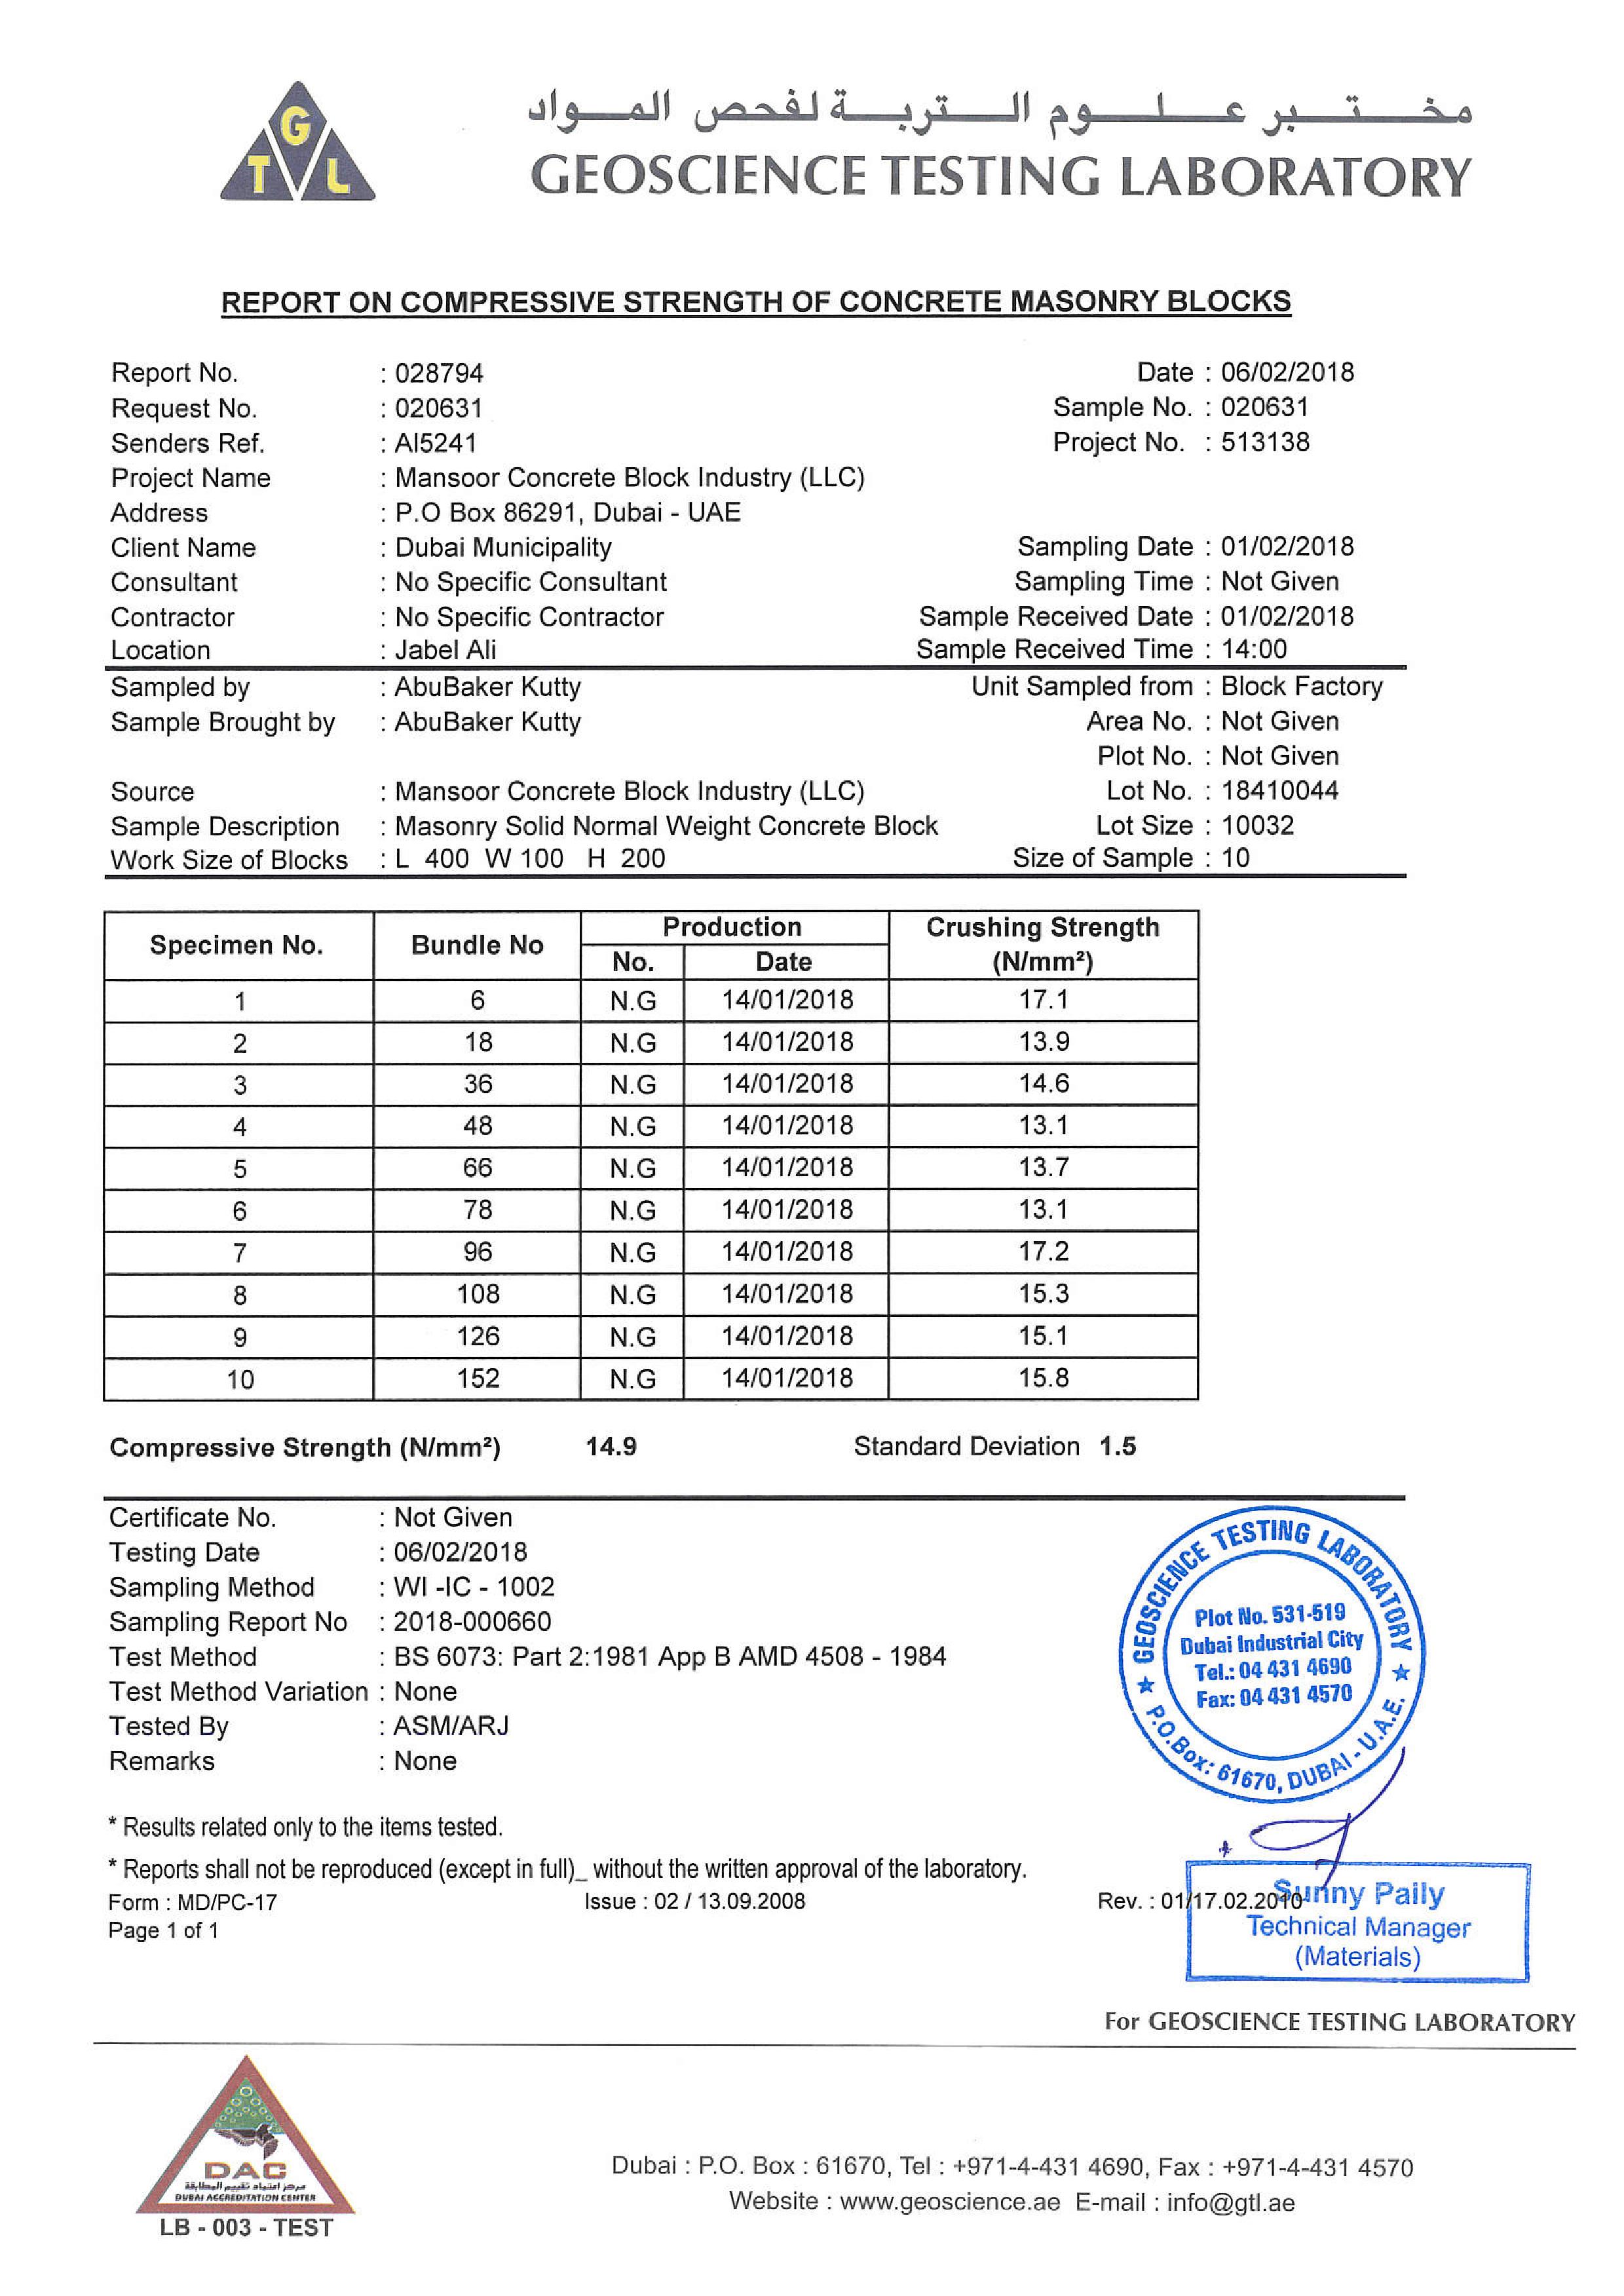 Certificates For Solid Blocks – MANSOOR CONCRETE BLOCK INDUSTRY LLC